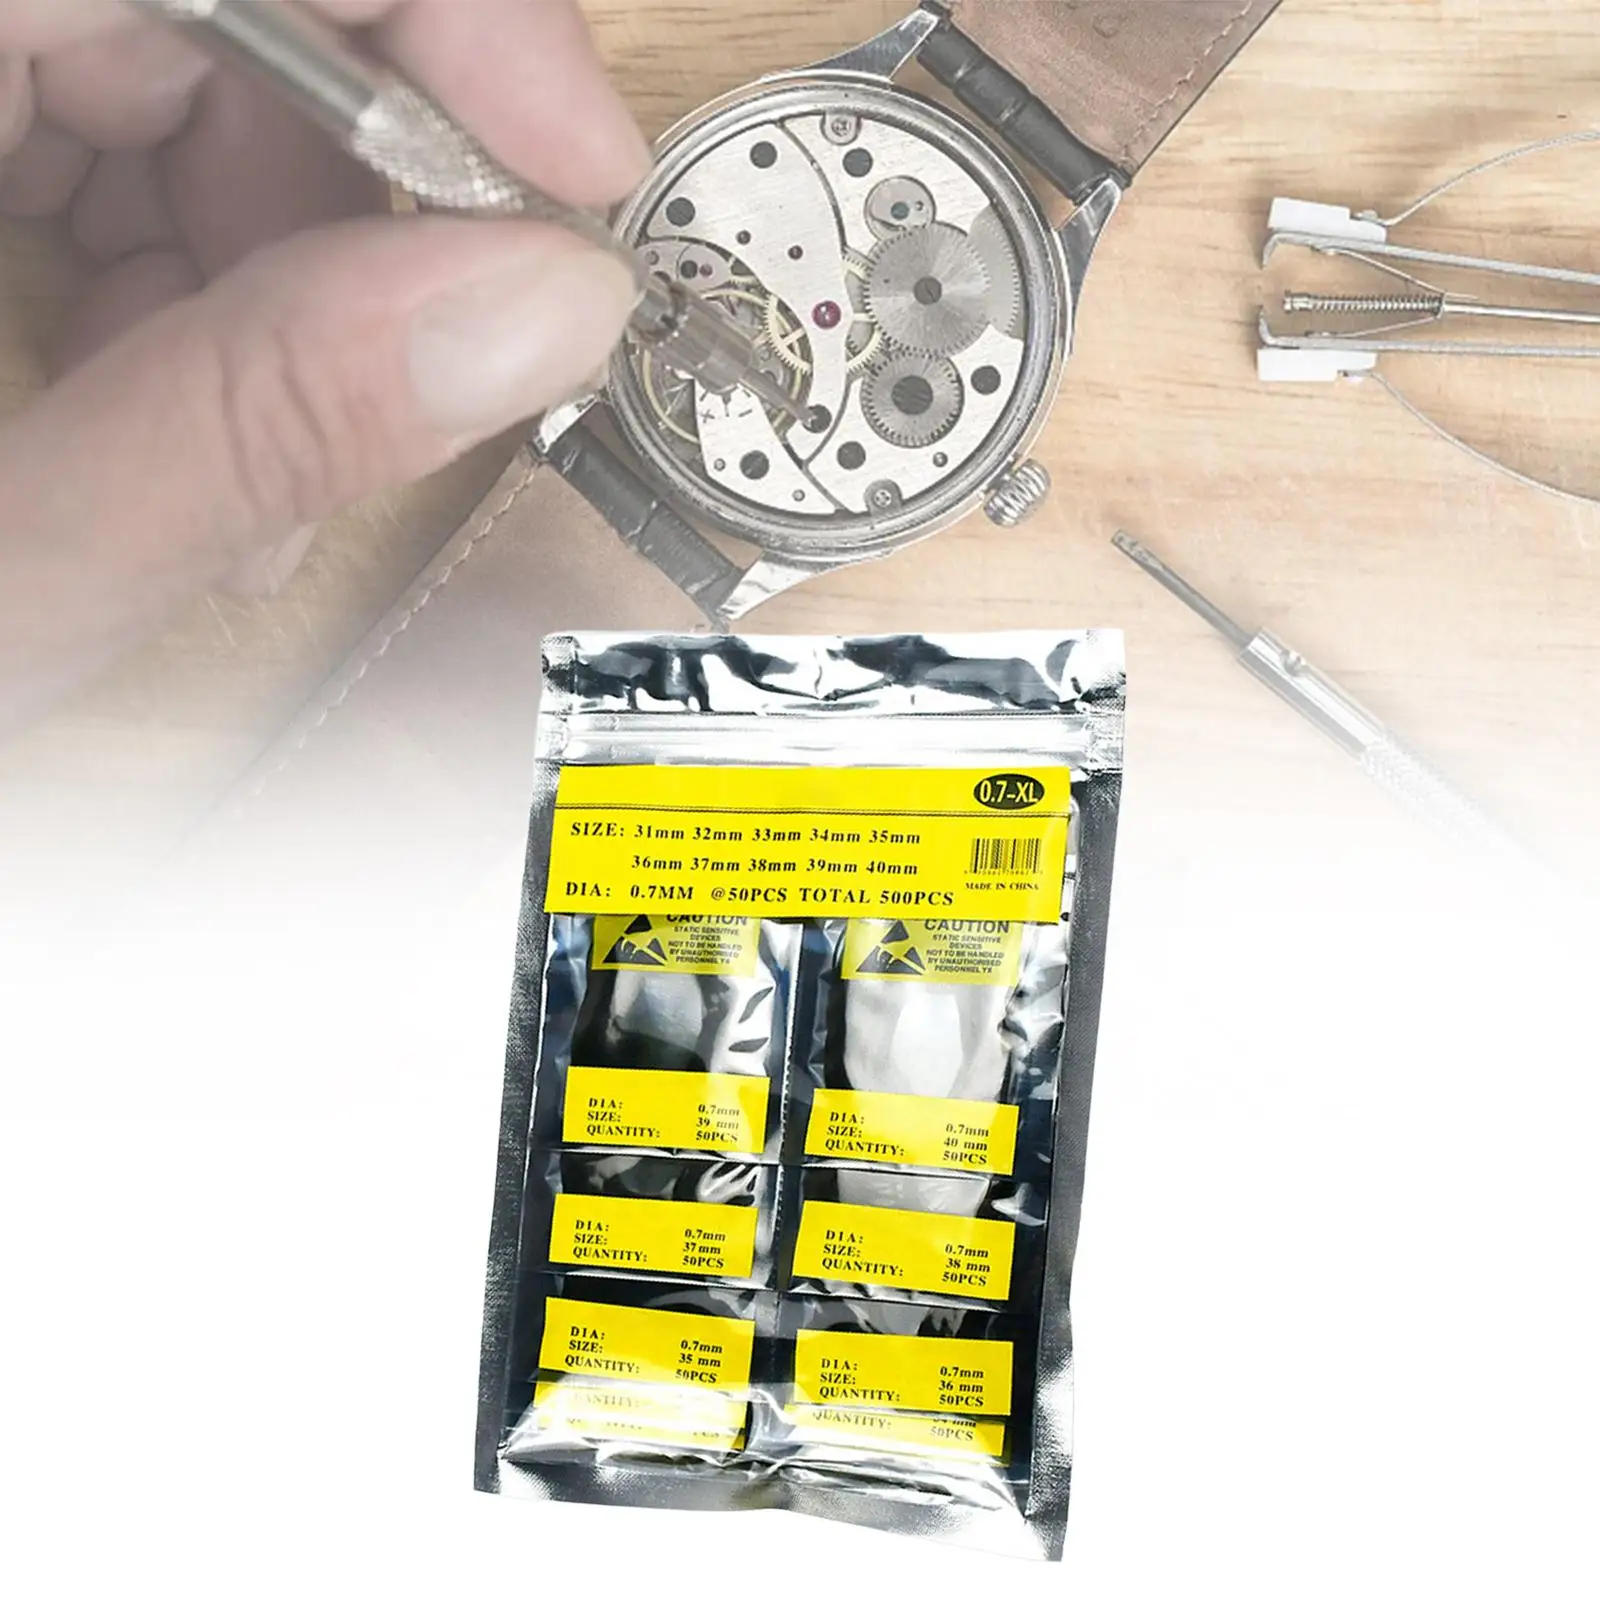 500Pcs Watch Back Gasket Waterproof Watch Repair Tool 0.7mm Rubber Seal Ring Watch Gasket Kit for Watch Backs Size 31mm-40mm